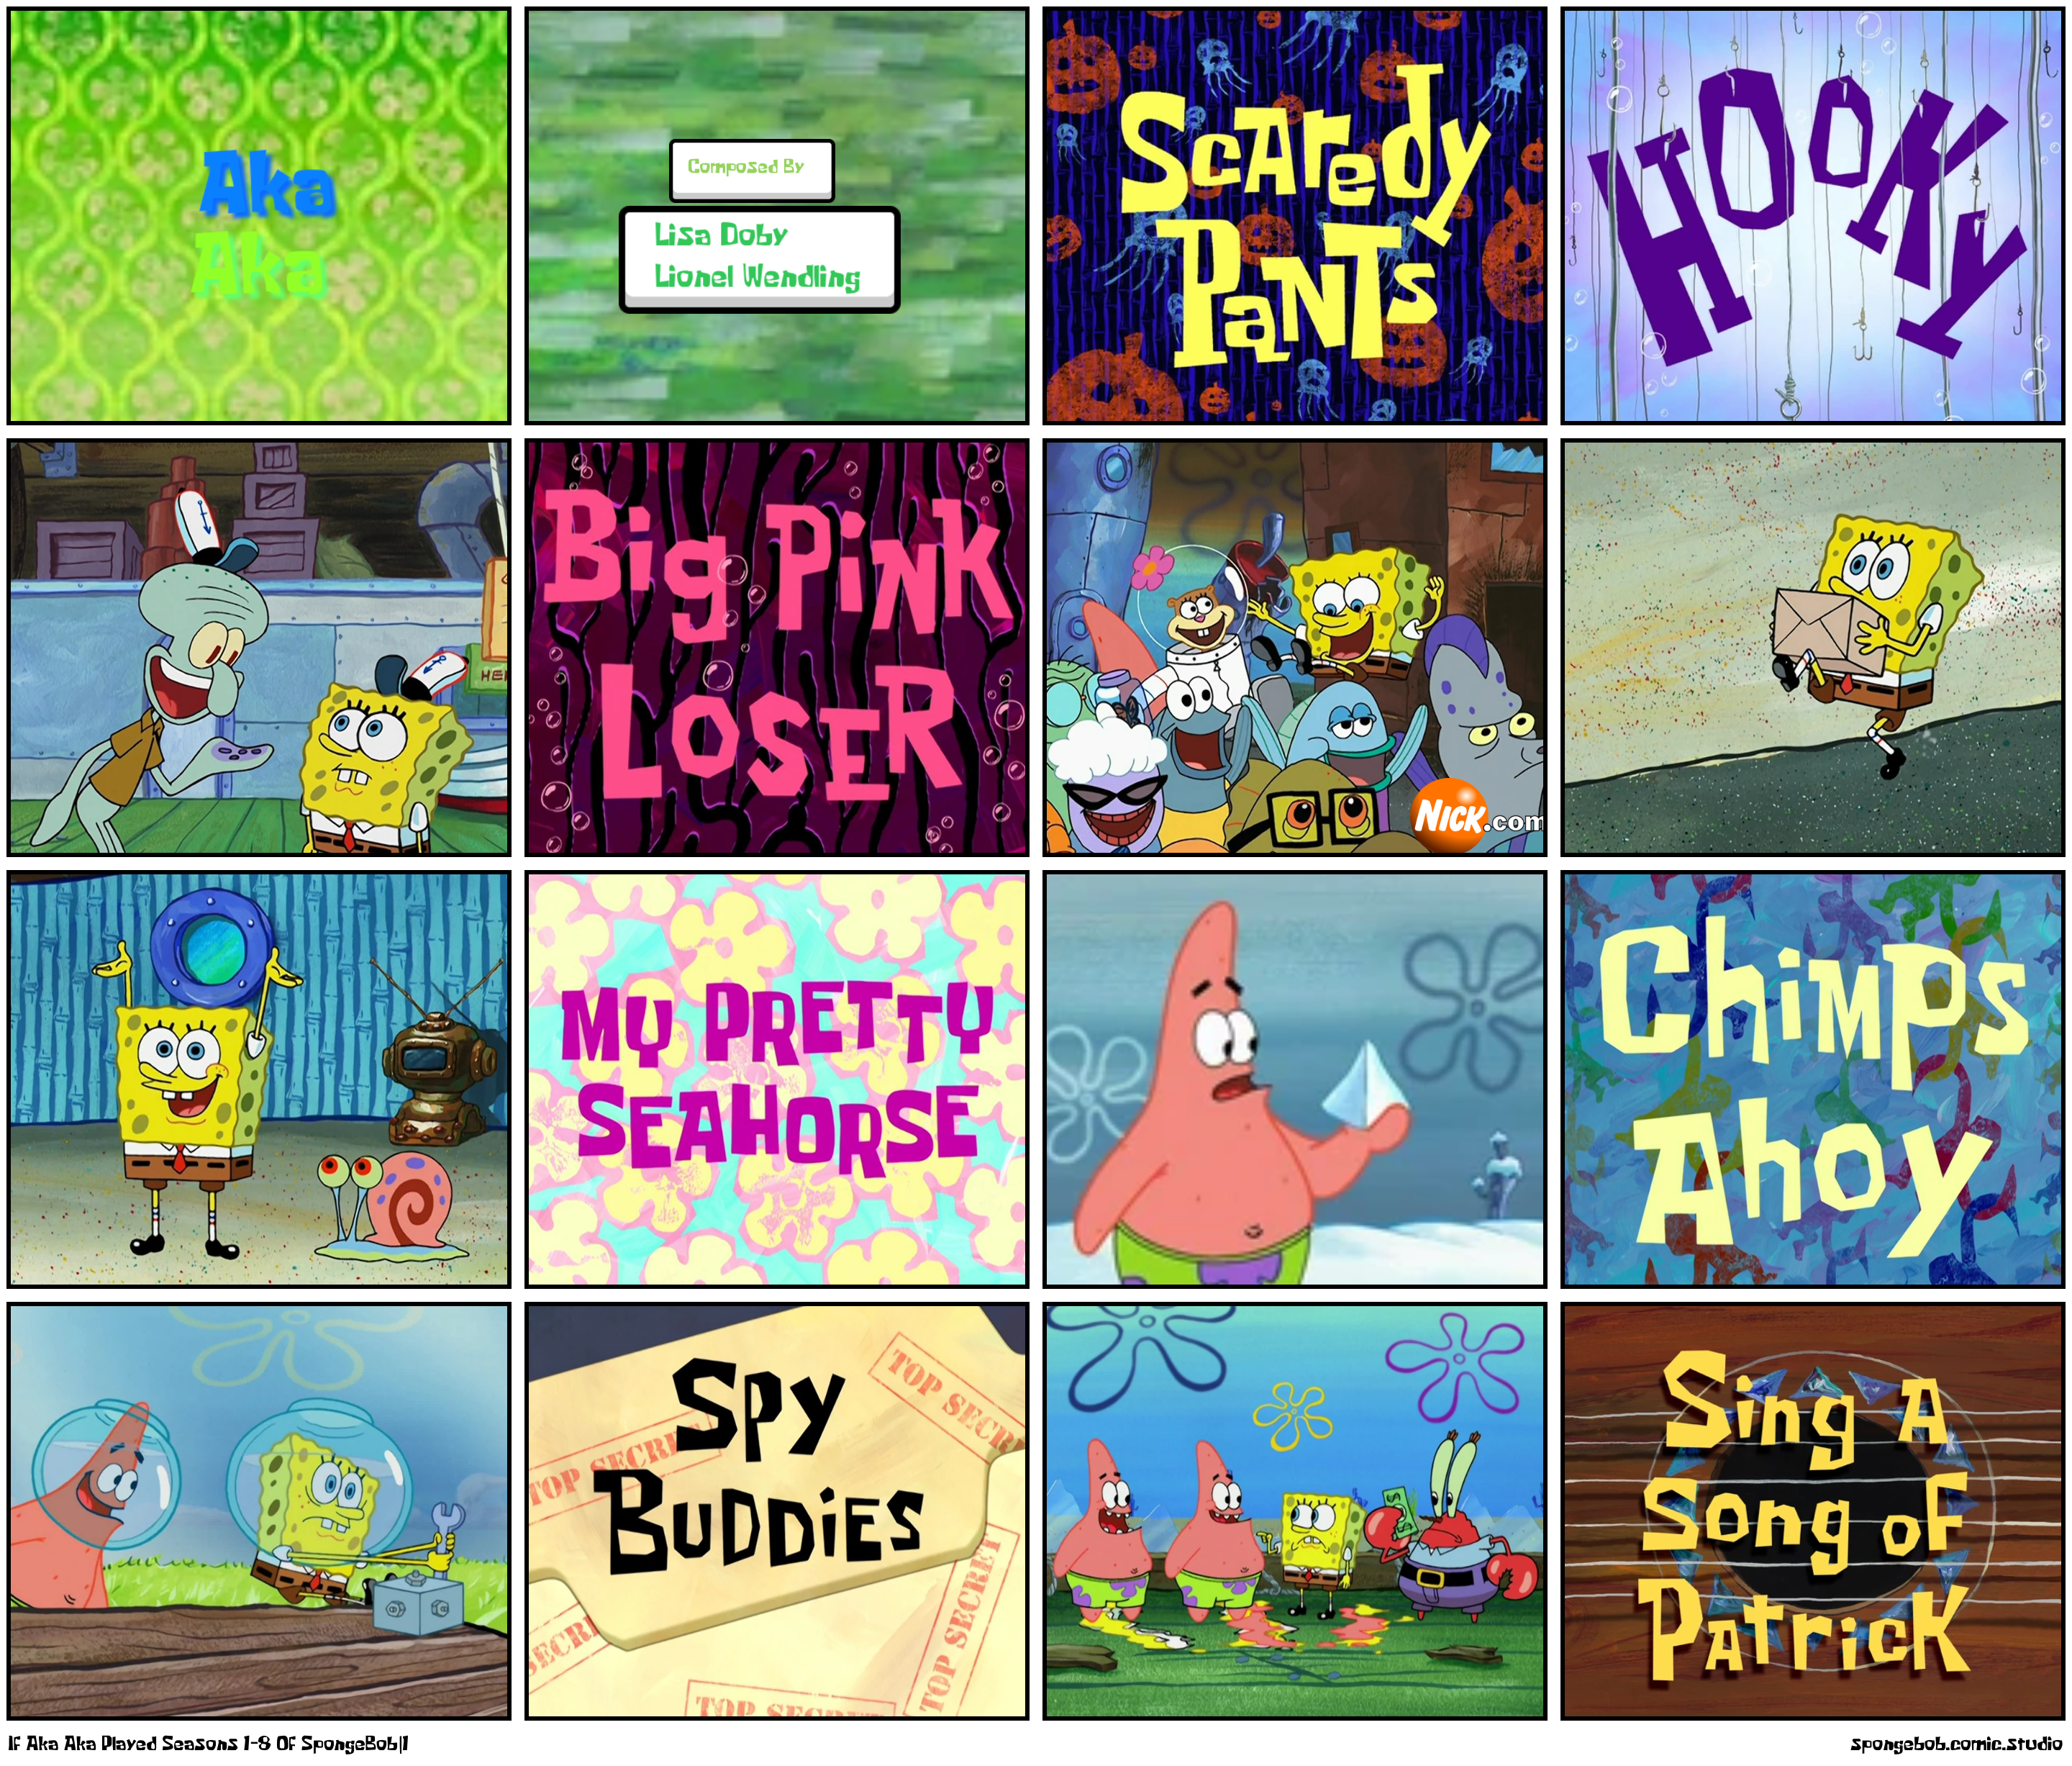 If Aka Aka Played Seasons 1-8 Of SpongeBob|1